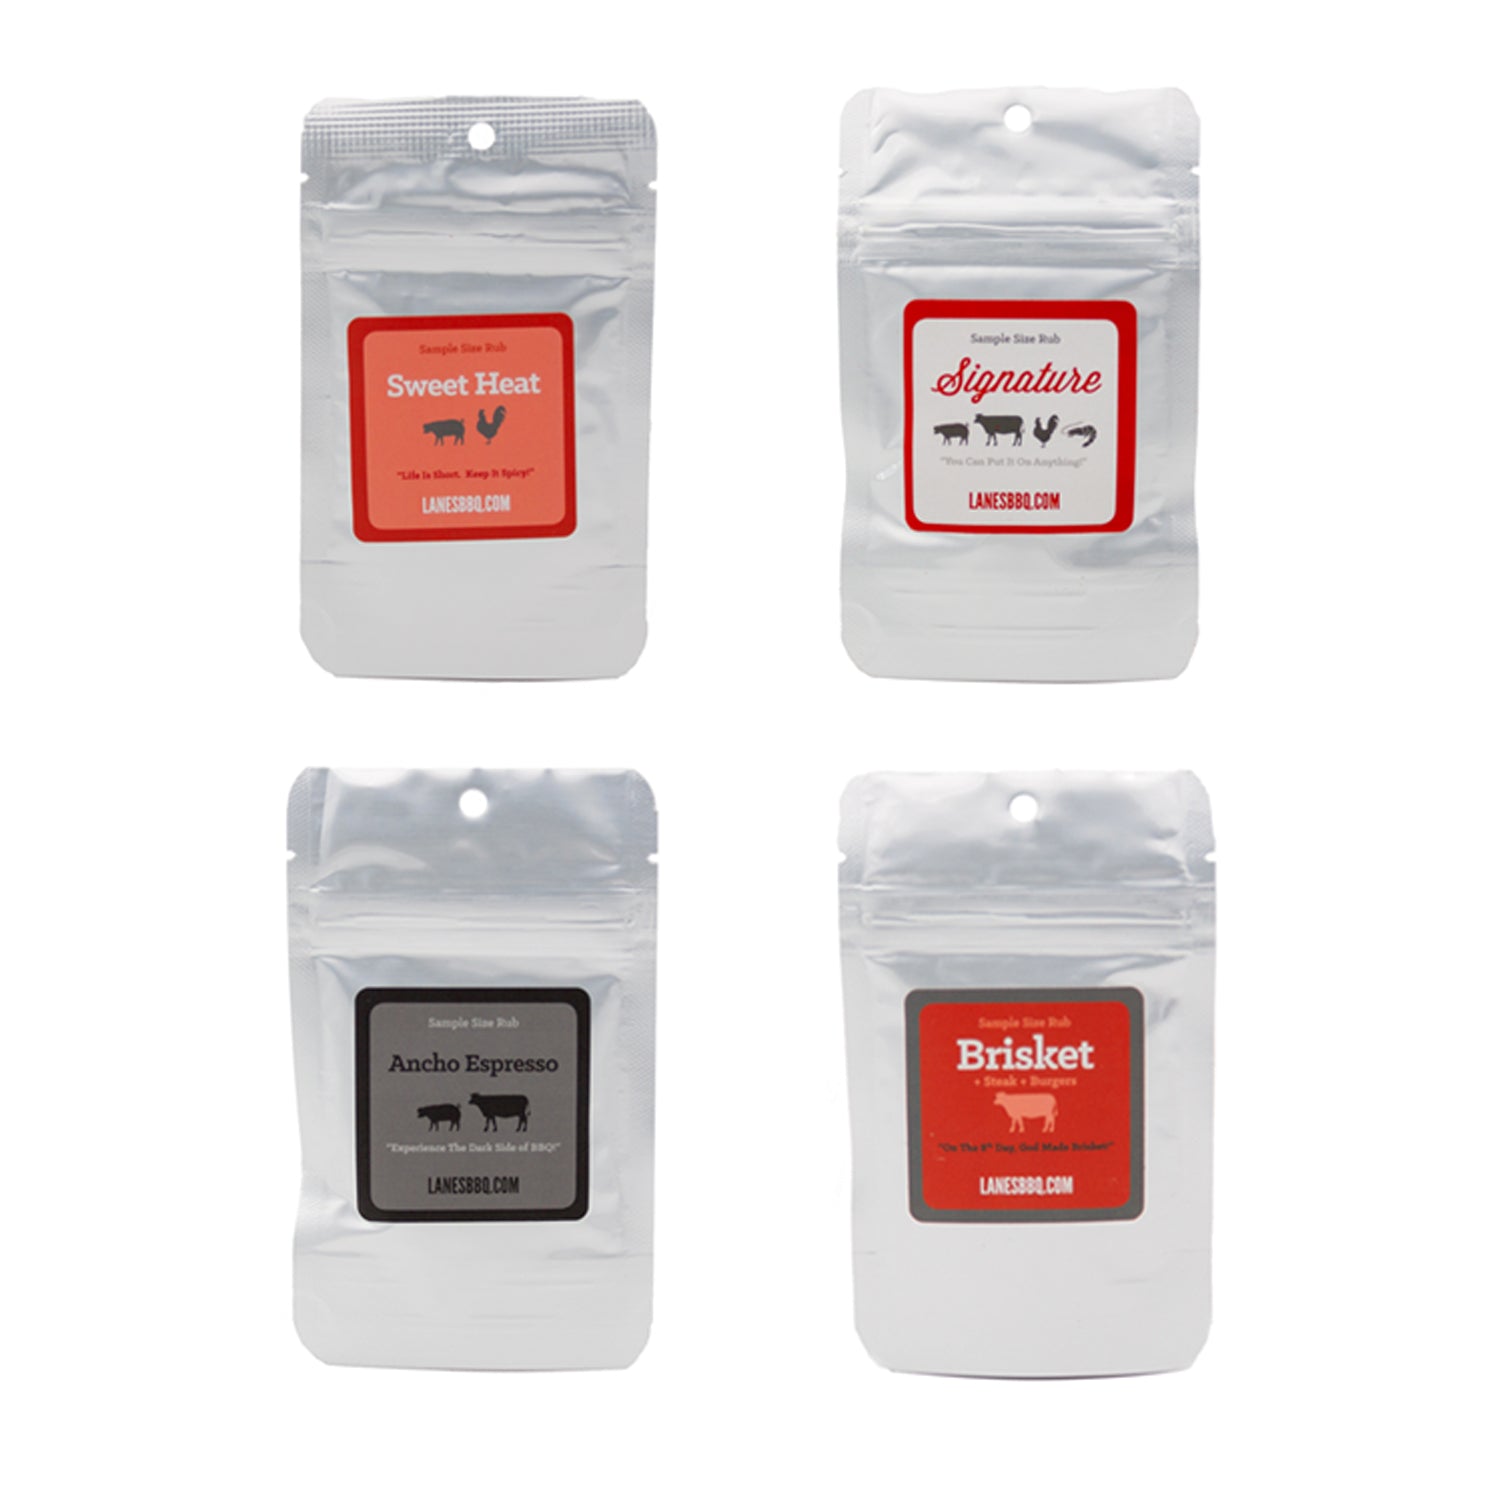 Lane's Core 4 rub sample bags